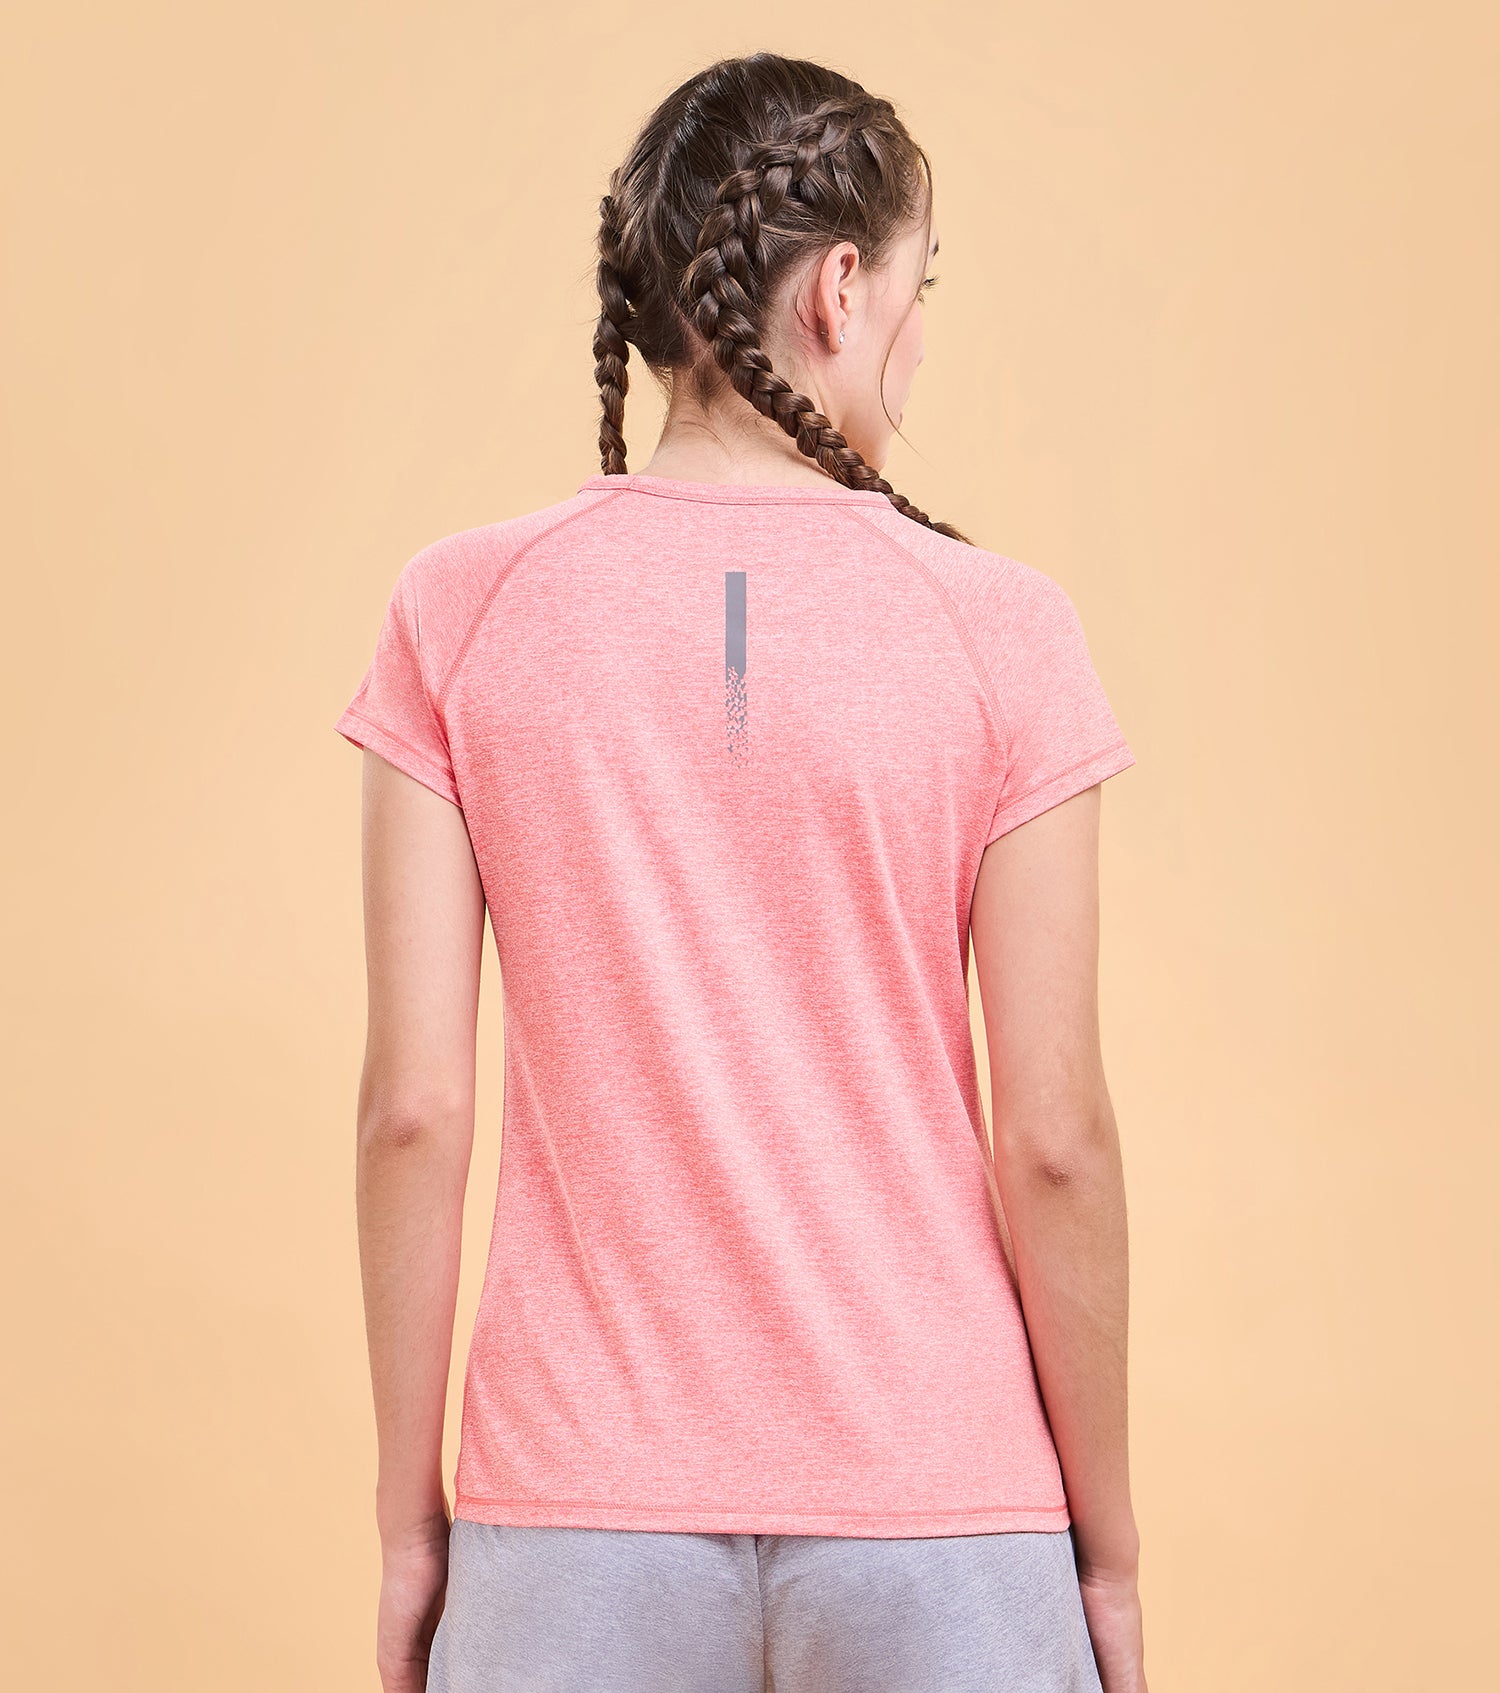 Enamor Athleisure Womens E089-Short Sleeve Scoop Neck Slim Active Graphic Tee